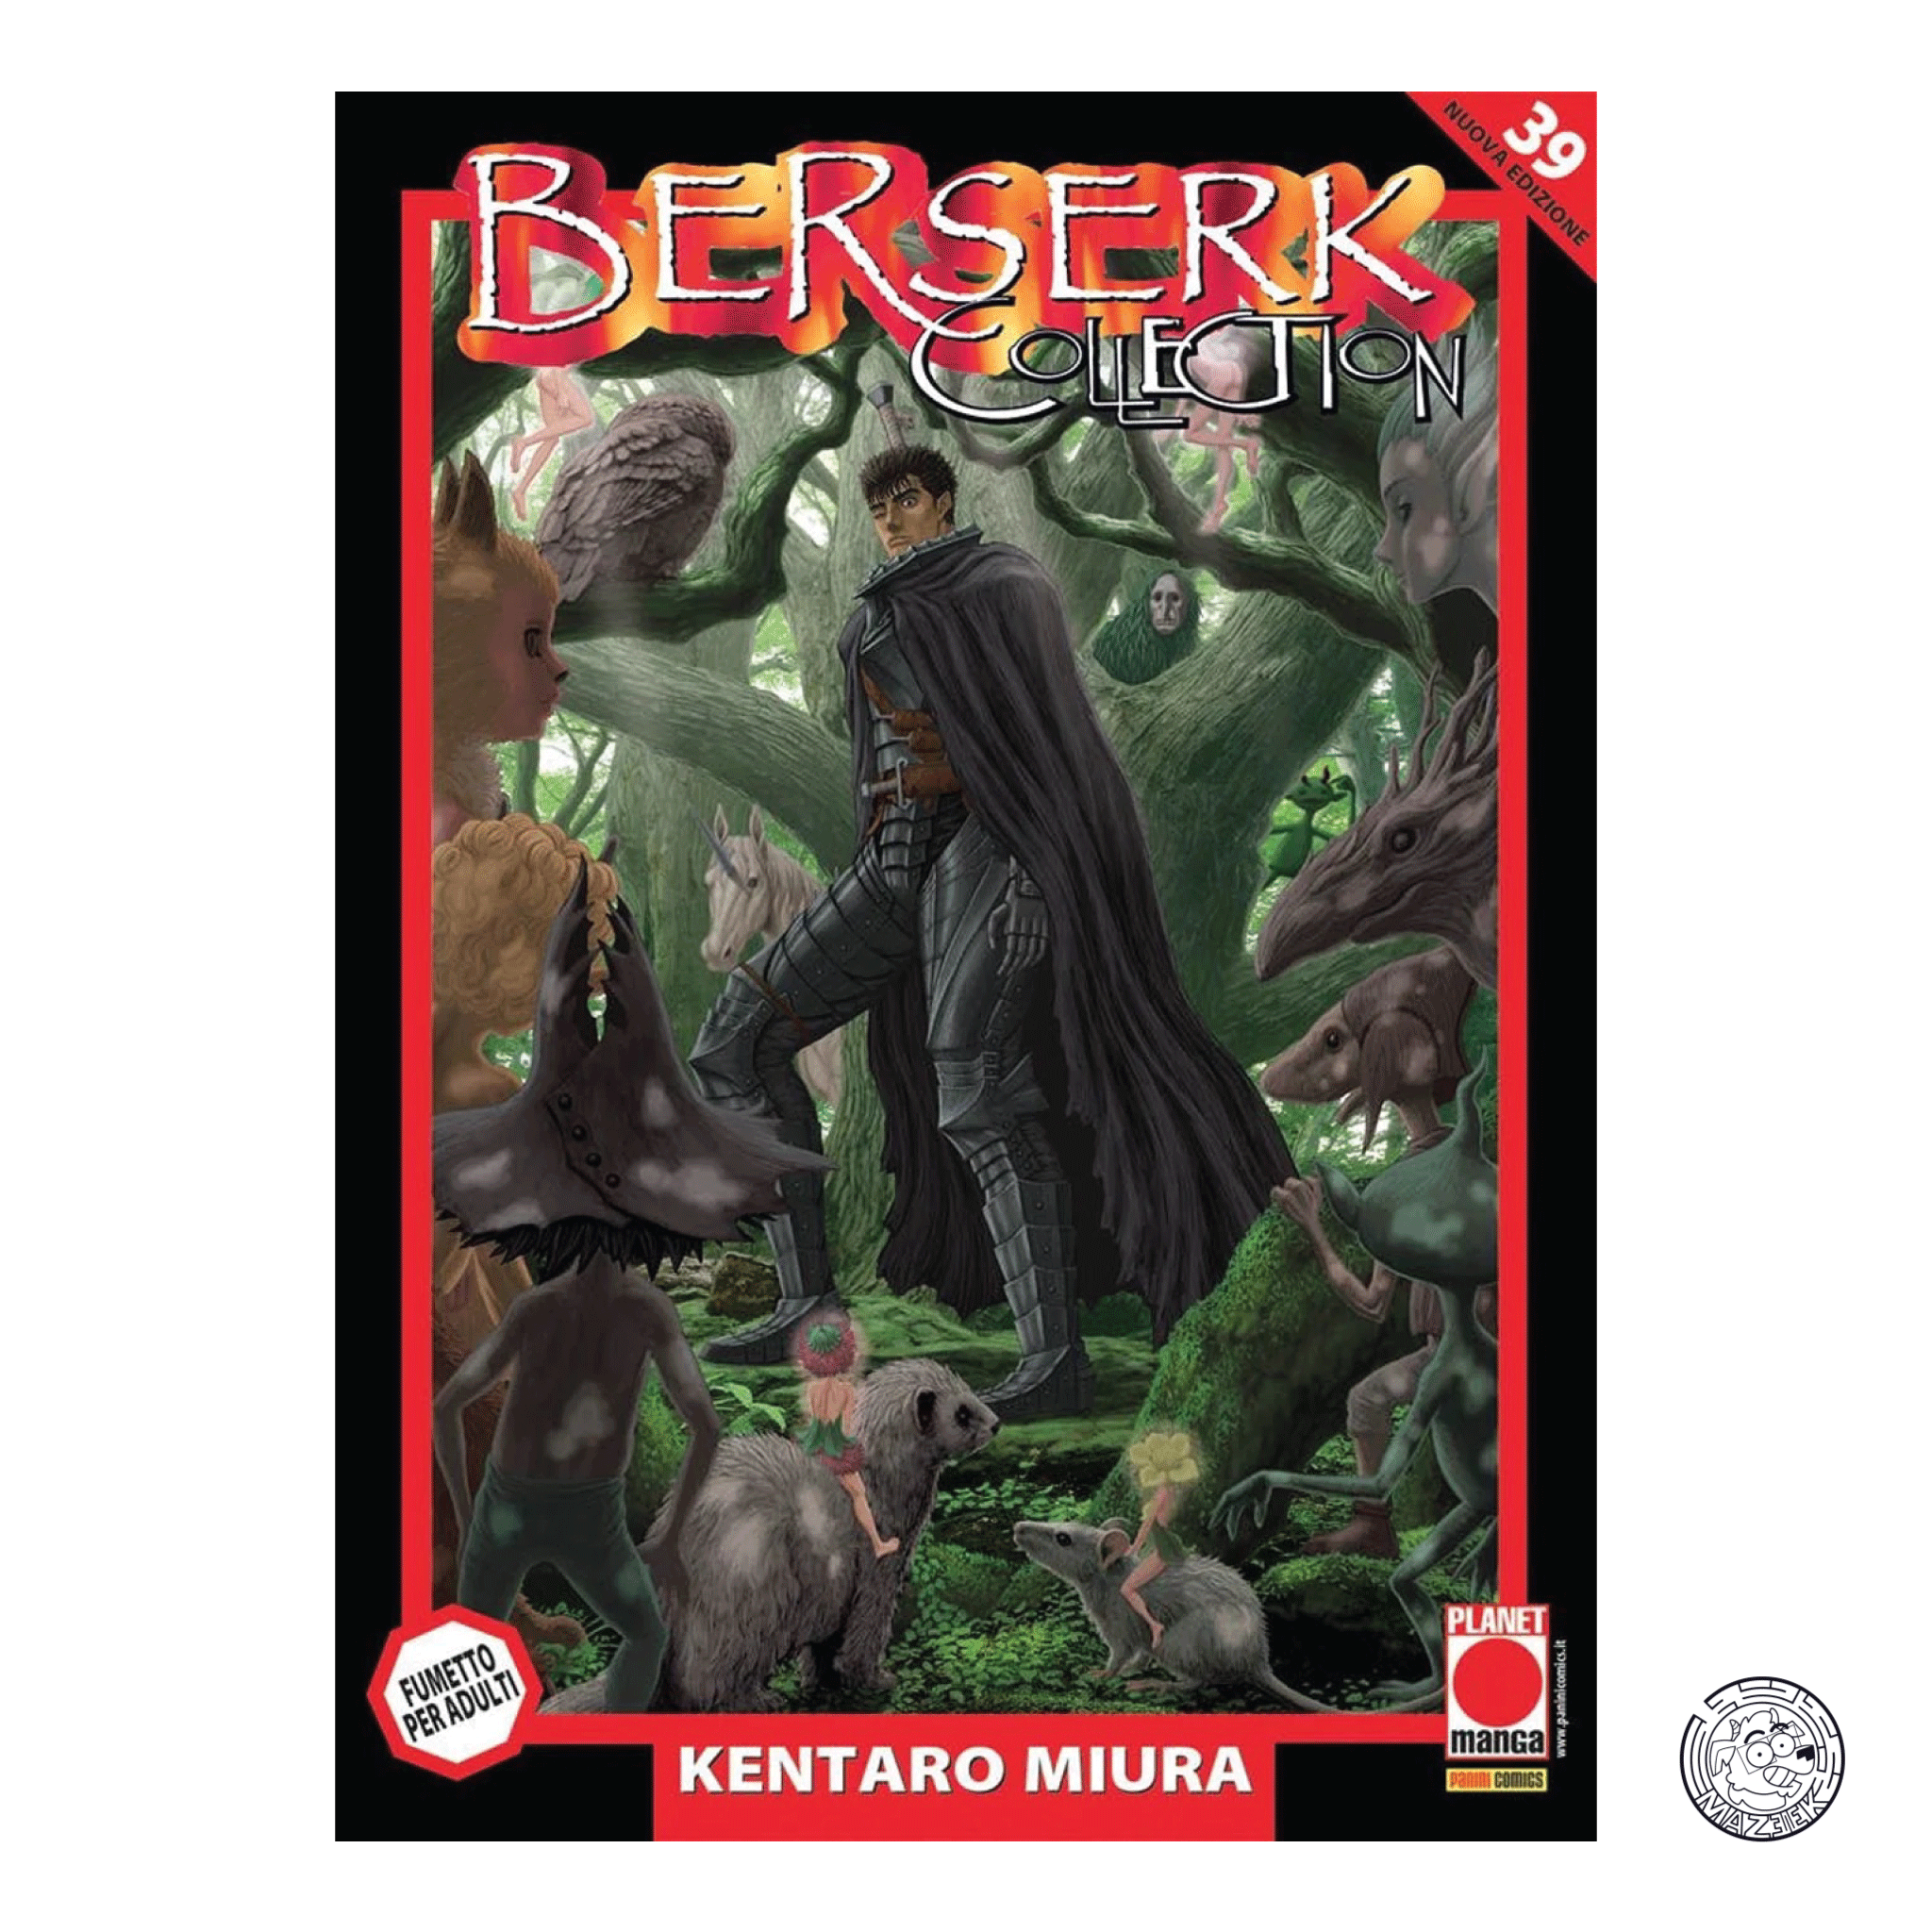 Berserk Collection Black Series 39 - Reprint 1